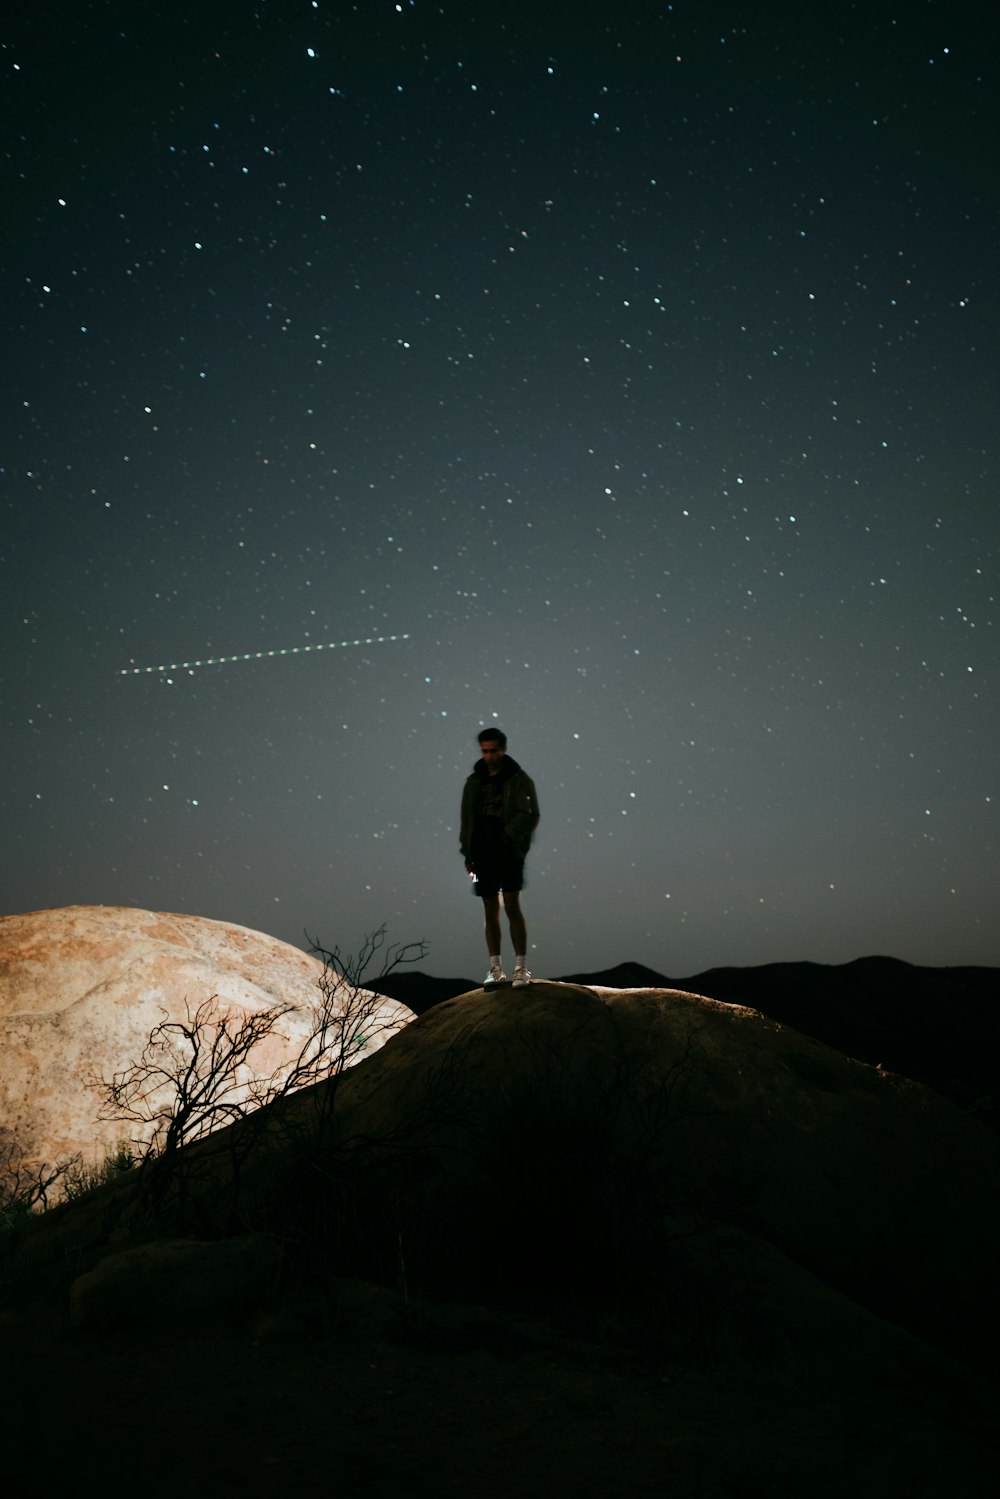 man in black jacket standing on brown rock during night time